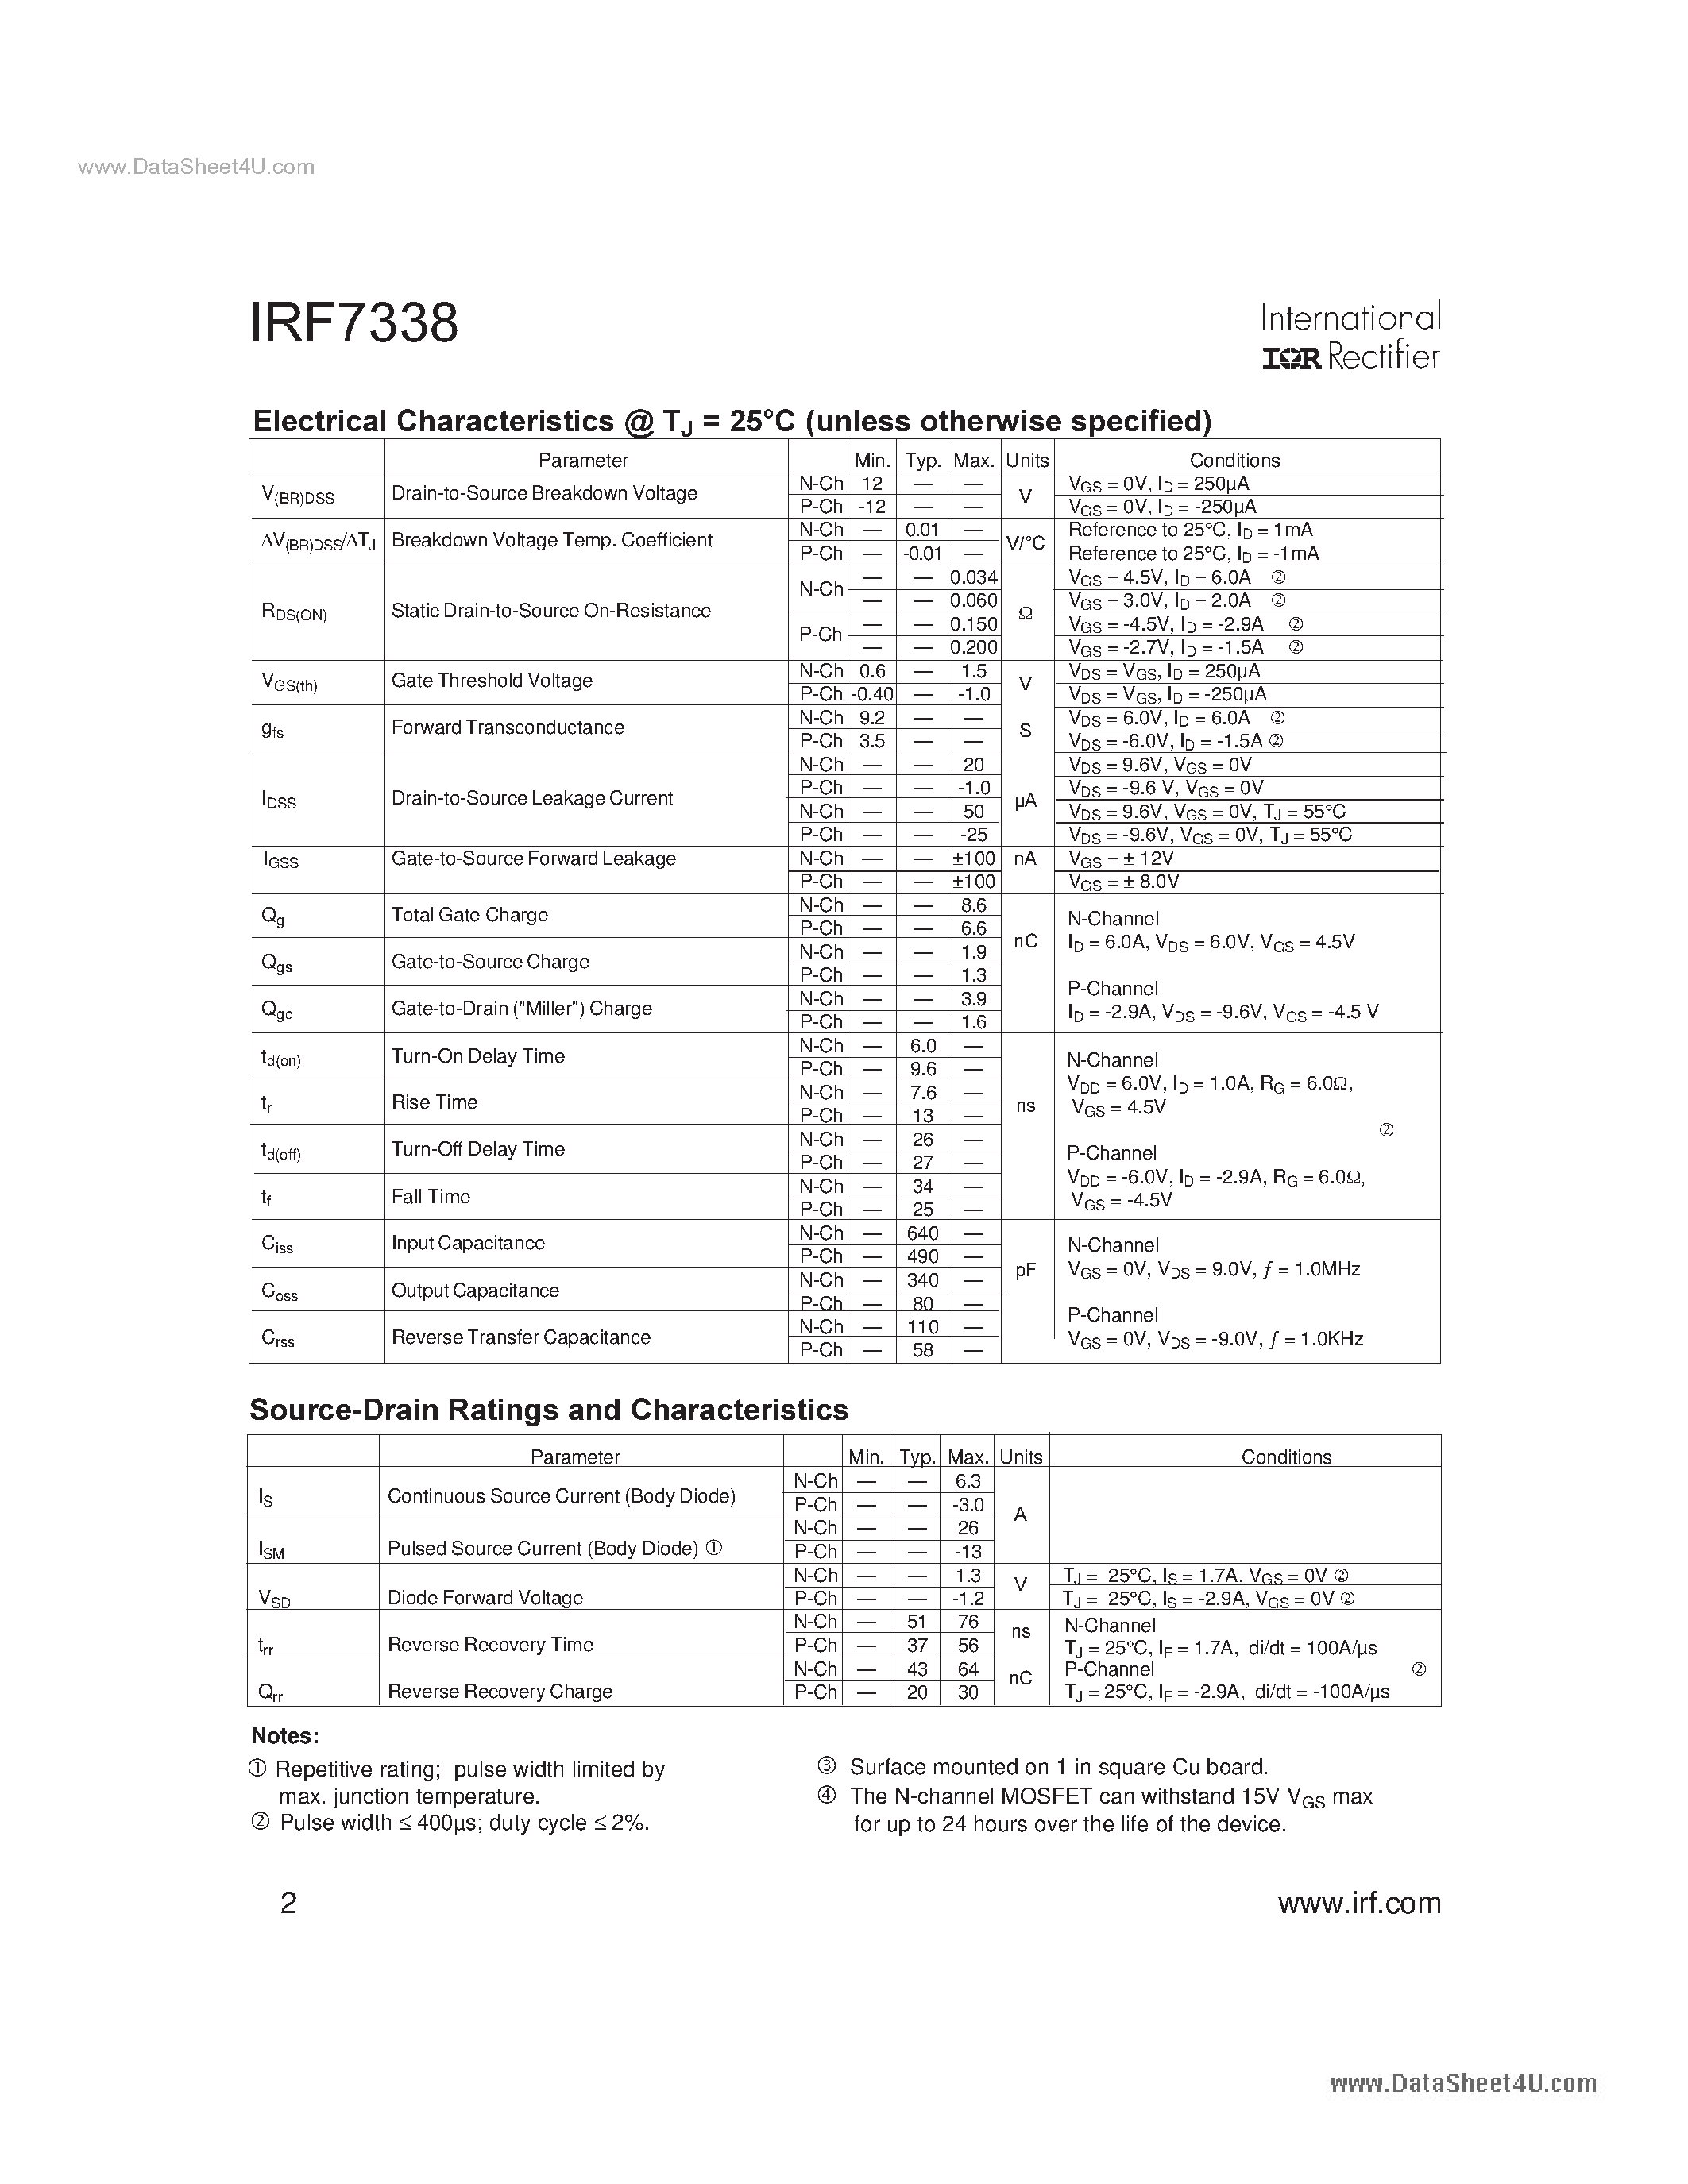 Даташит F7338 - Search -----> IRF7338 страница 2